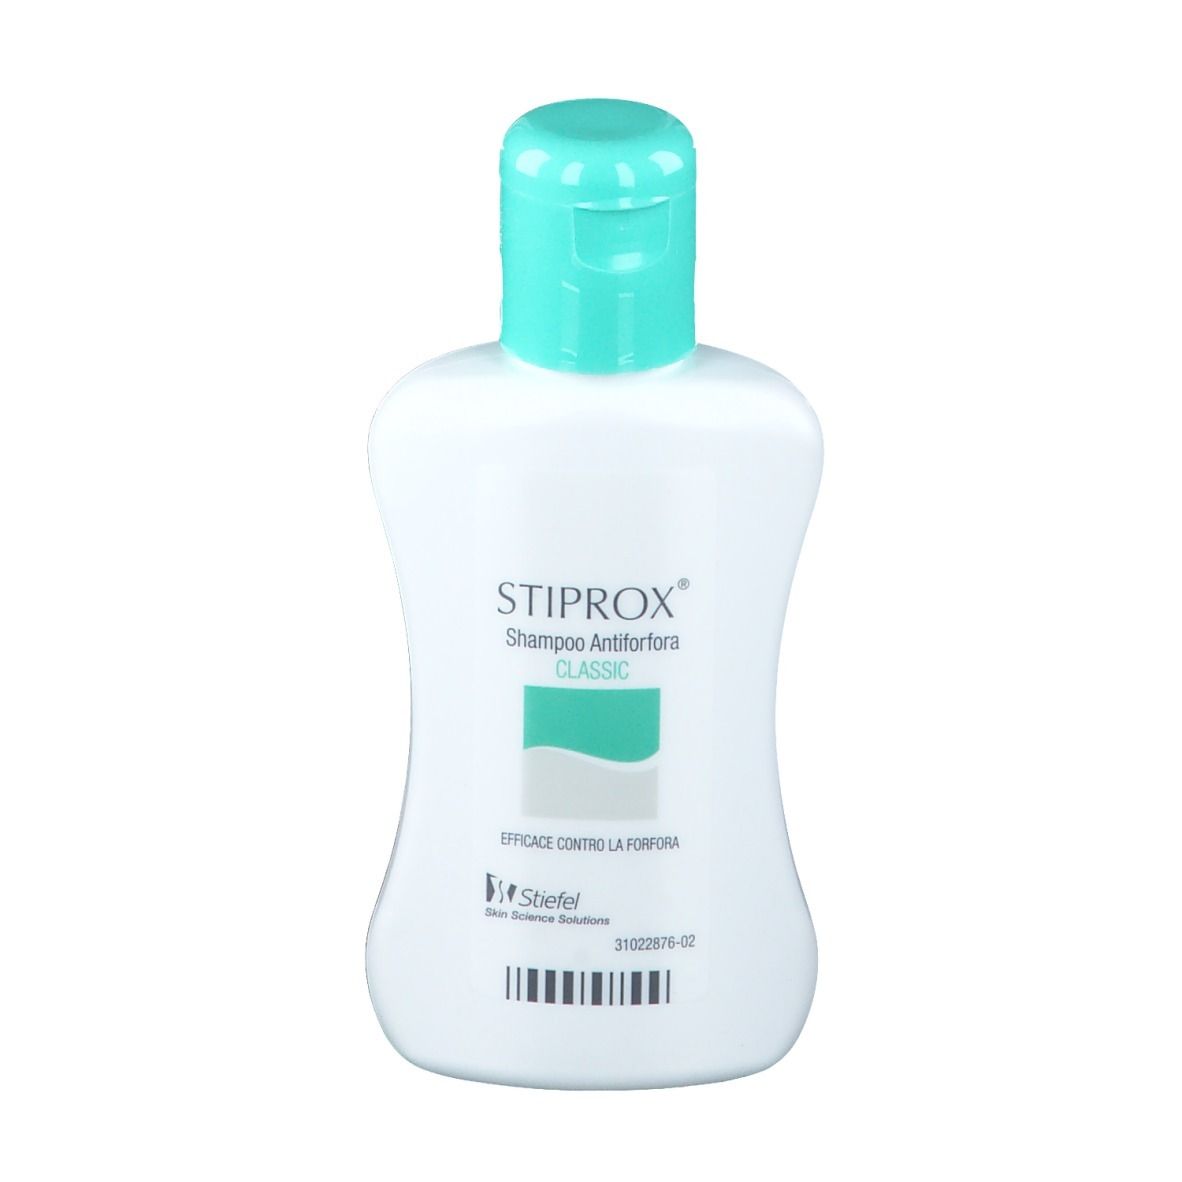 Stiprox(R) Classic Shampoo Antiforfora Stiefel 100ml